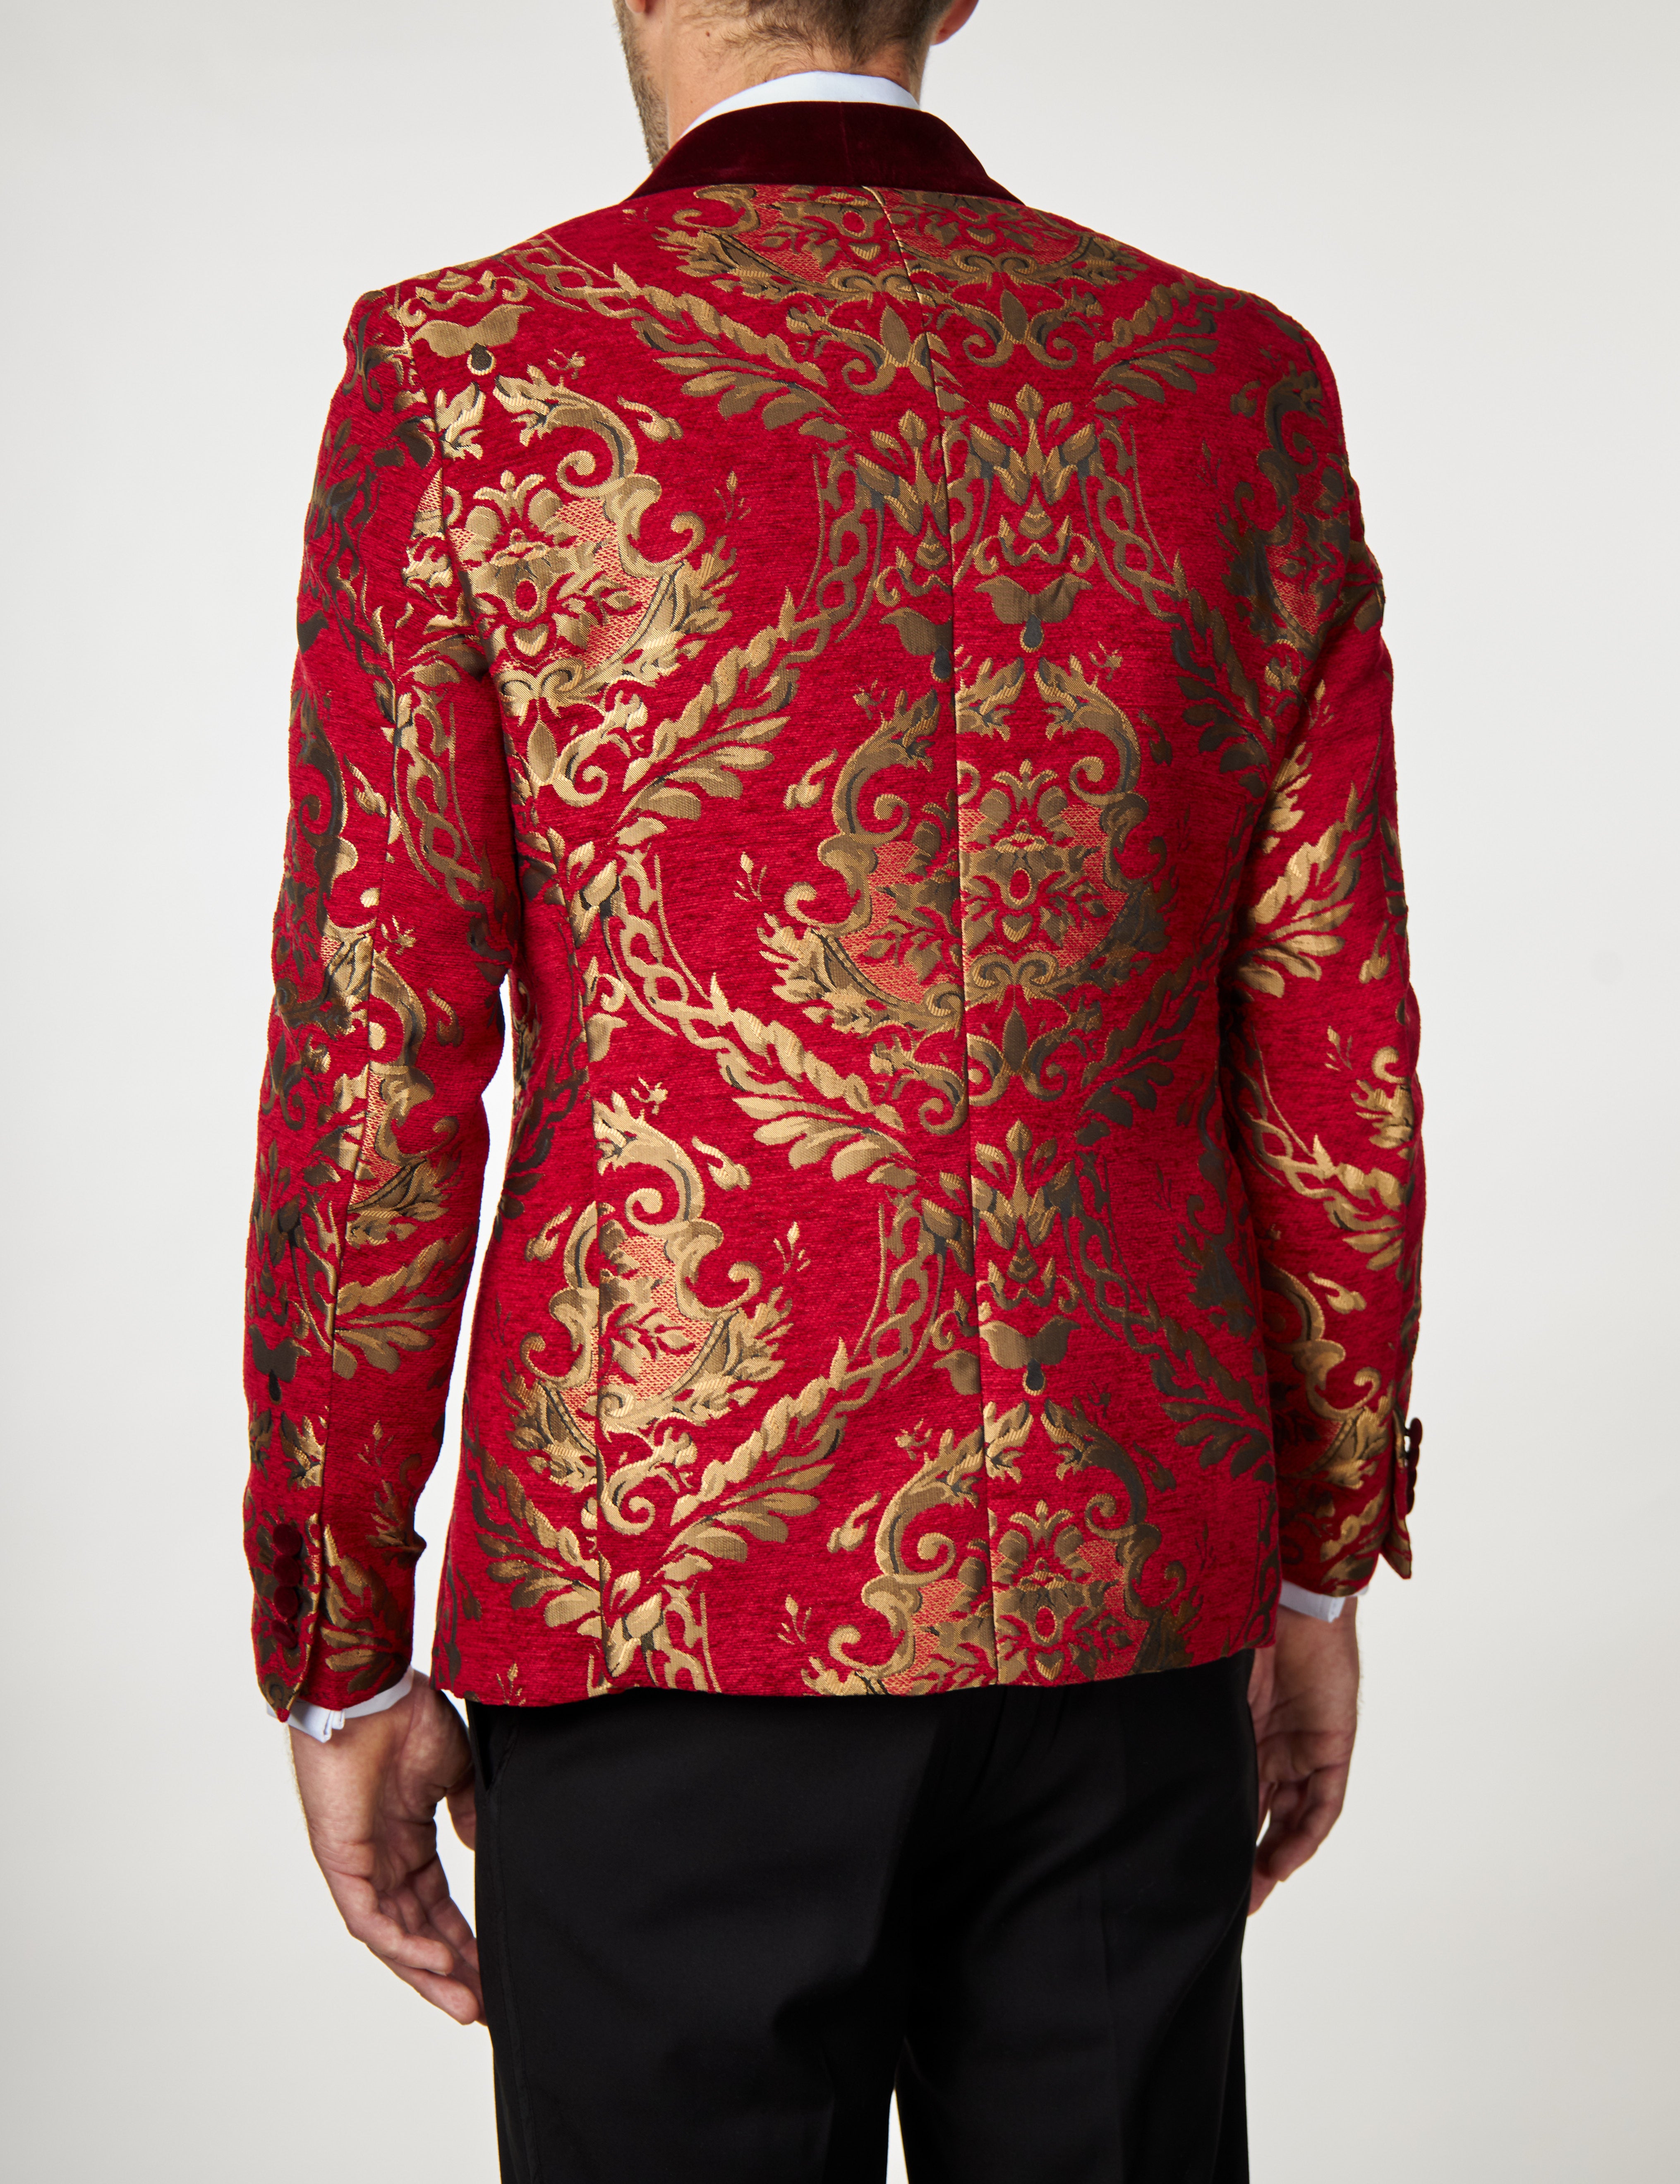 Gold Brocade Paisley on Crimson Red Jacquard Jacket